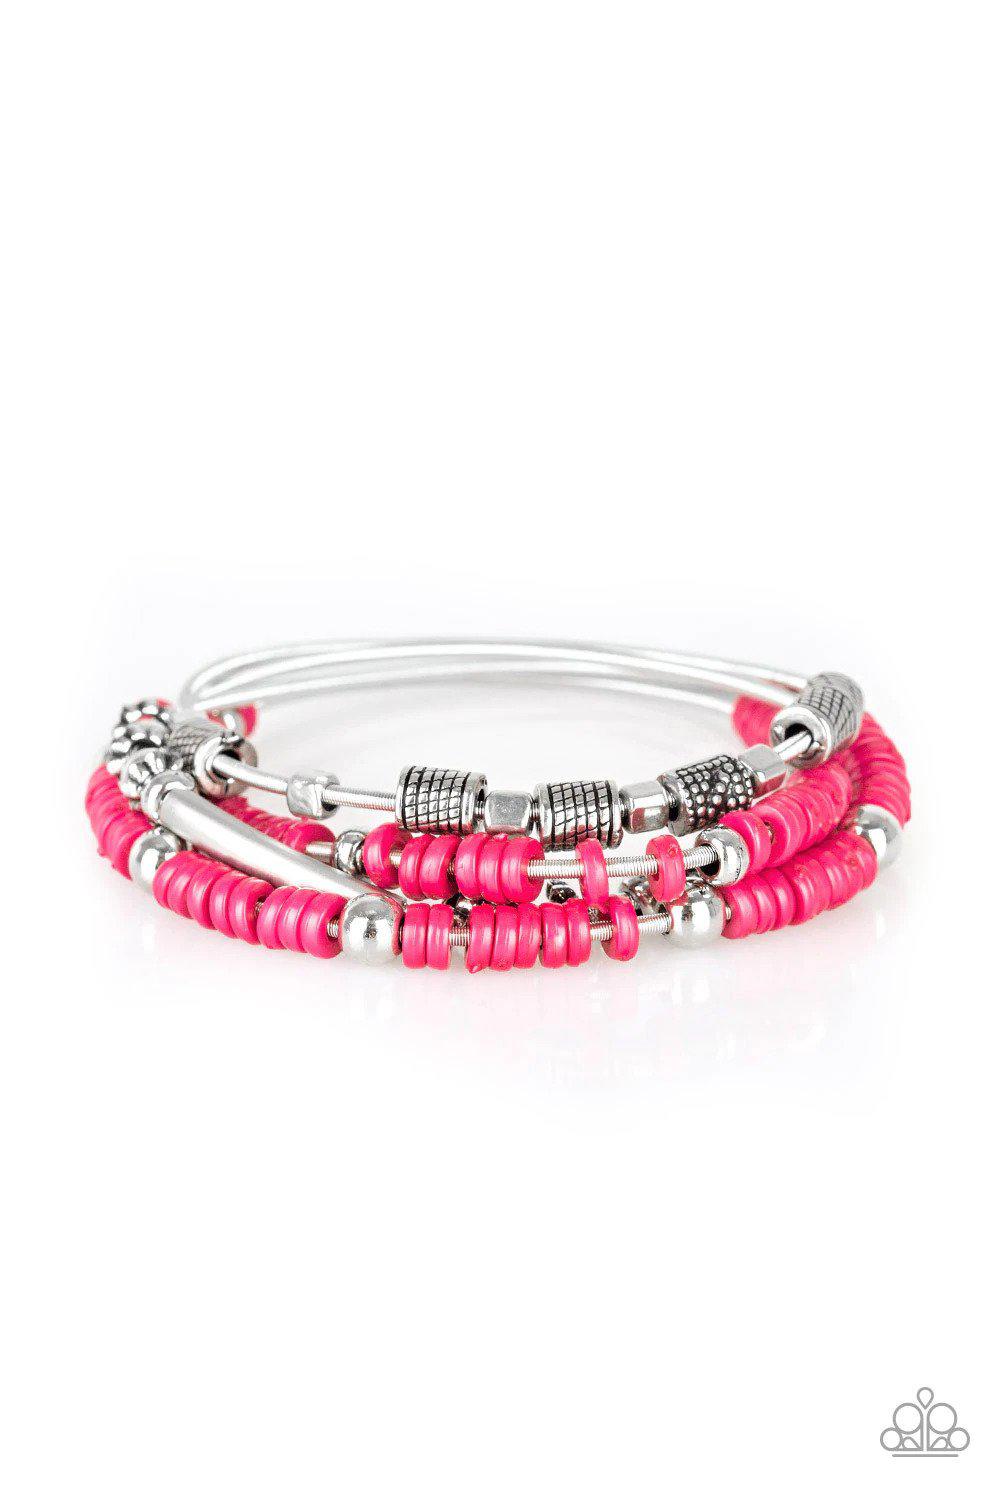 Tribal Spunk Pink Bracelet - Paparazzi Accessories - Paparazzi Accessories- lightbox - CarasShop.com - $5 Jewelry by Cara Jewels